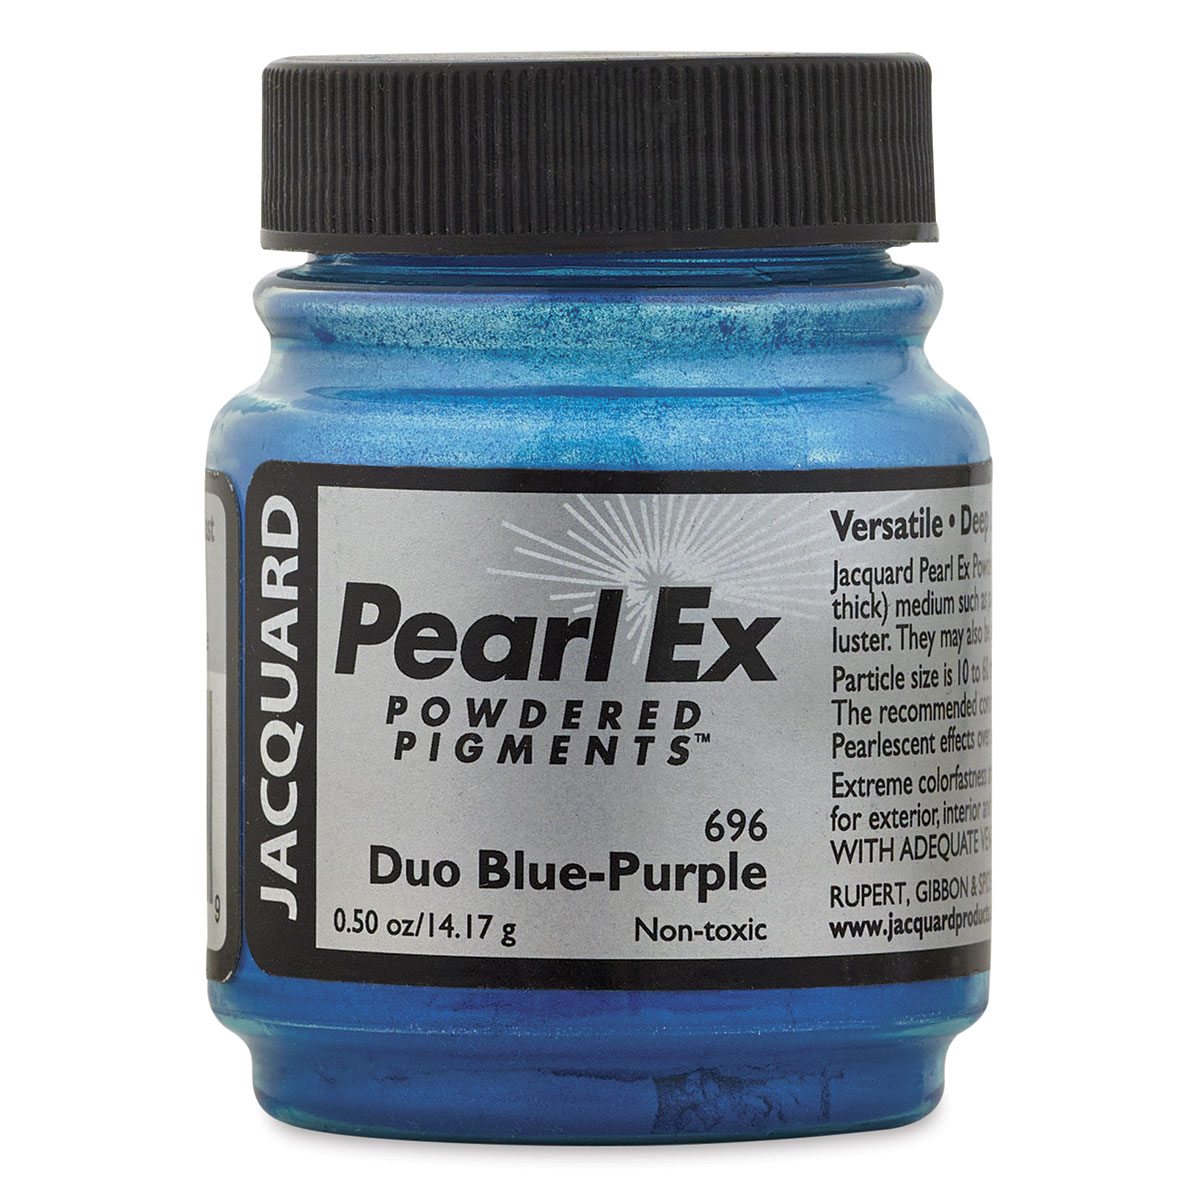 Jacquard Pearl Ex Powdered Pigment - Duo Blue-Purple, .5 oz.